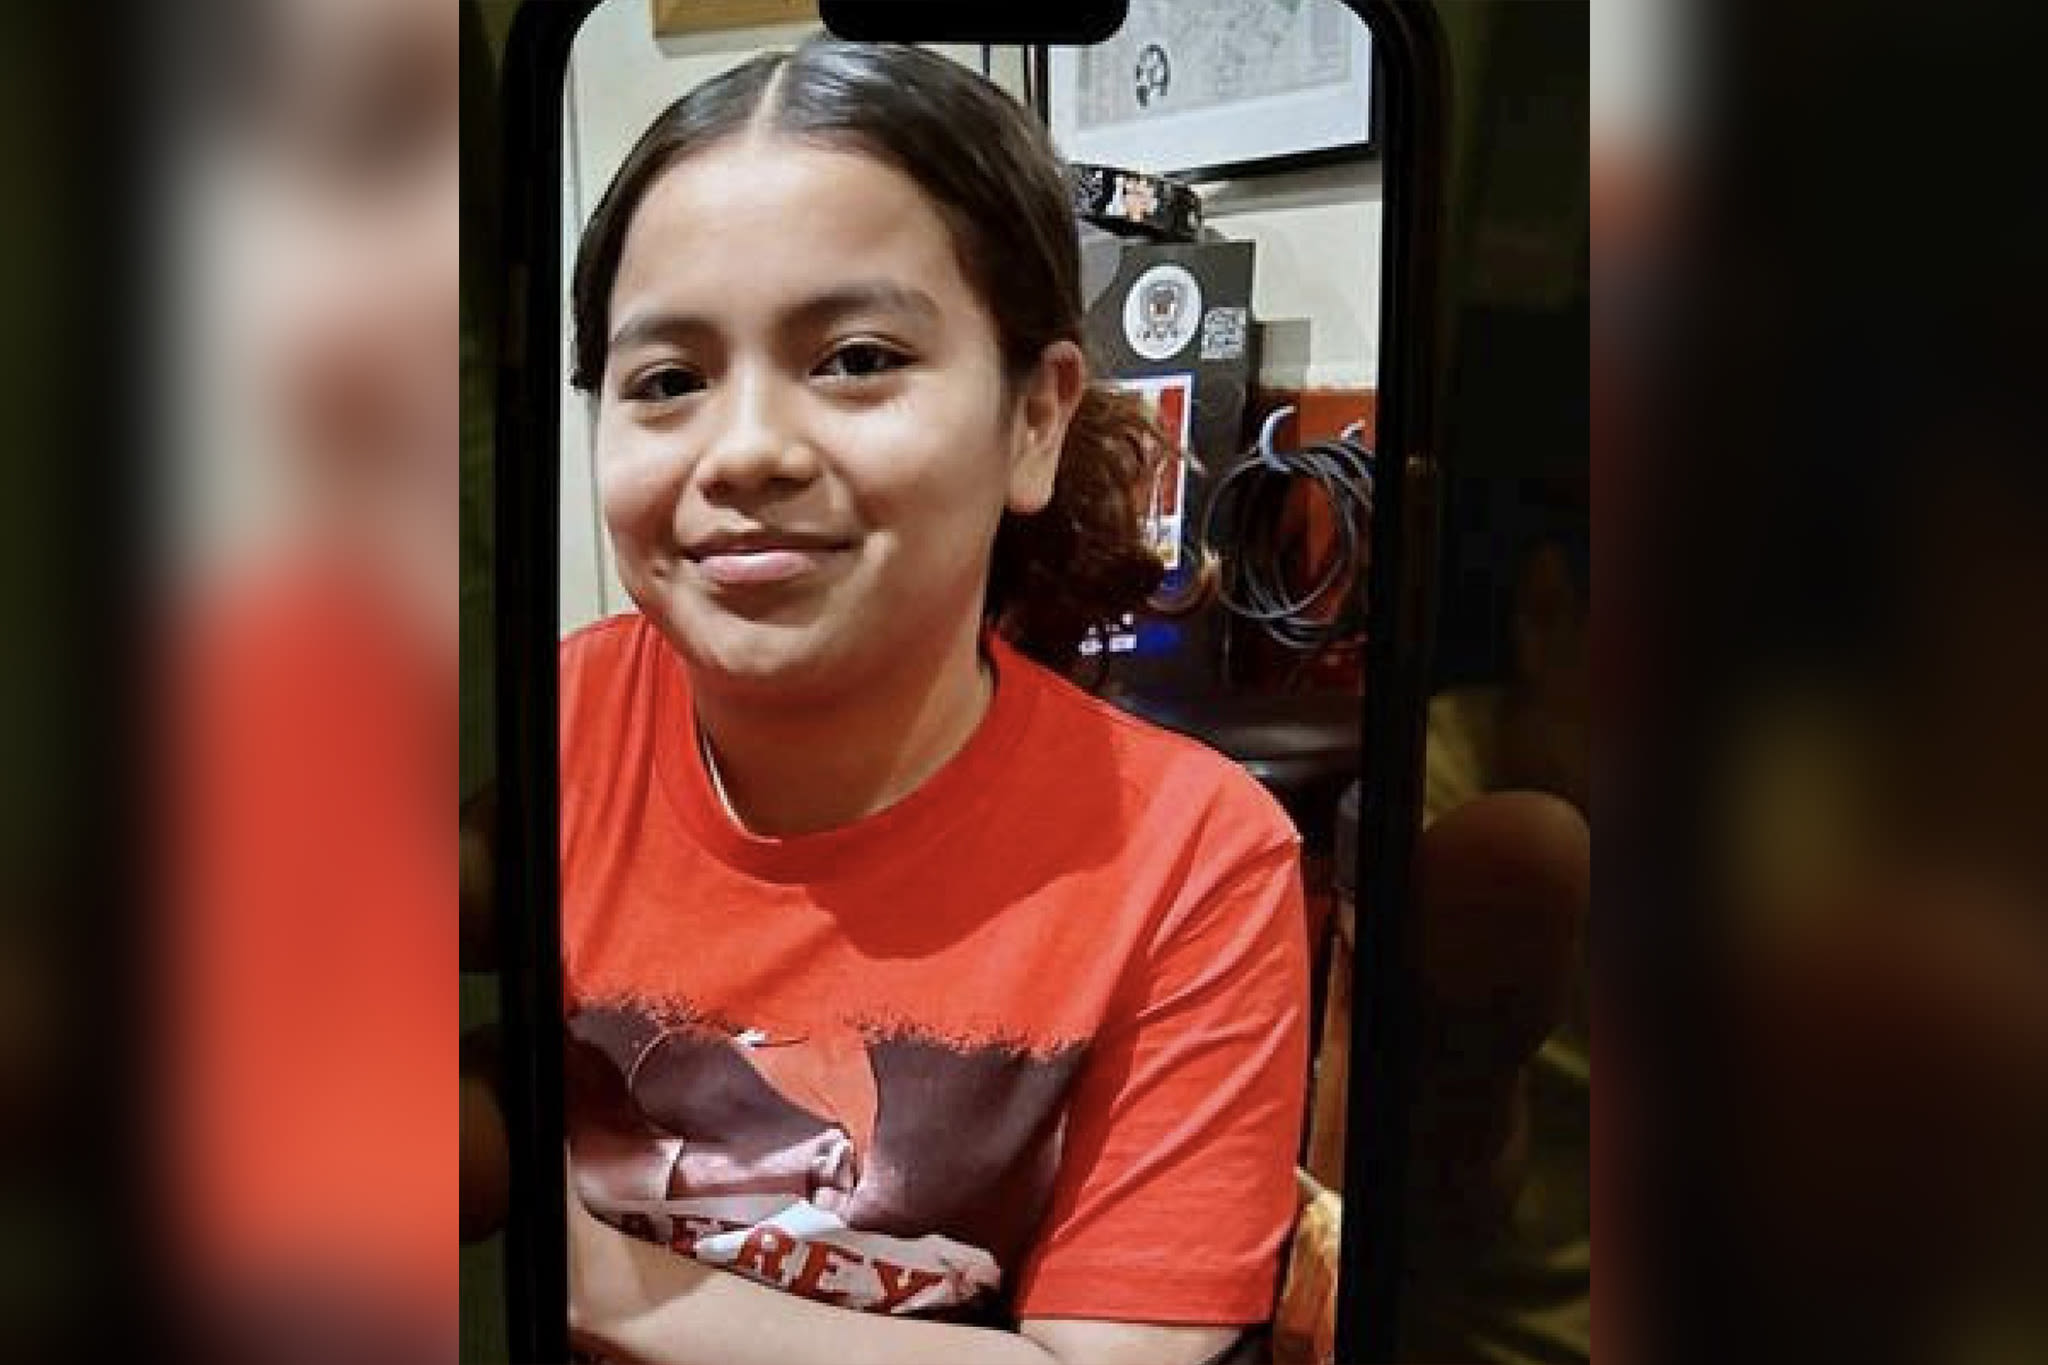 14-year-old girl missing near SF's Tenderloin neighborhood